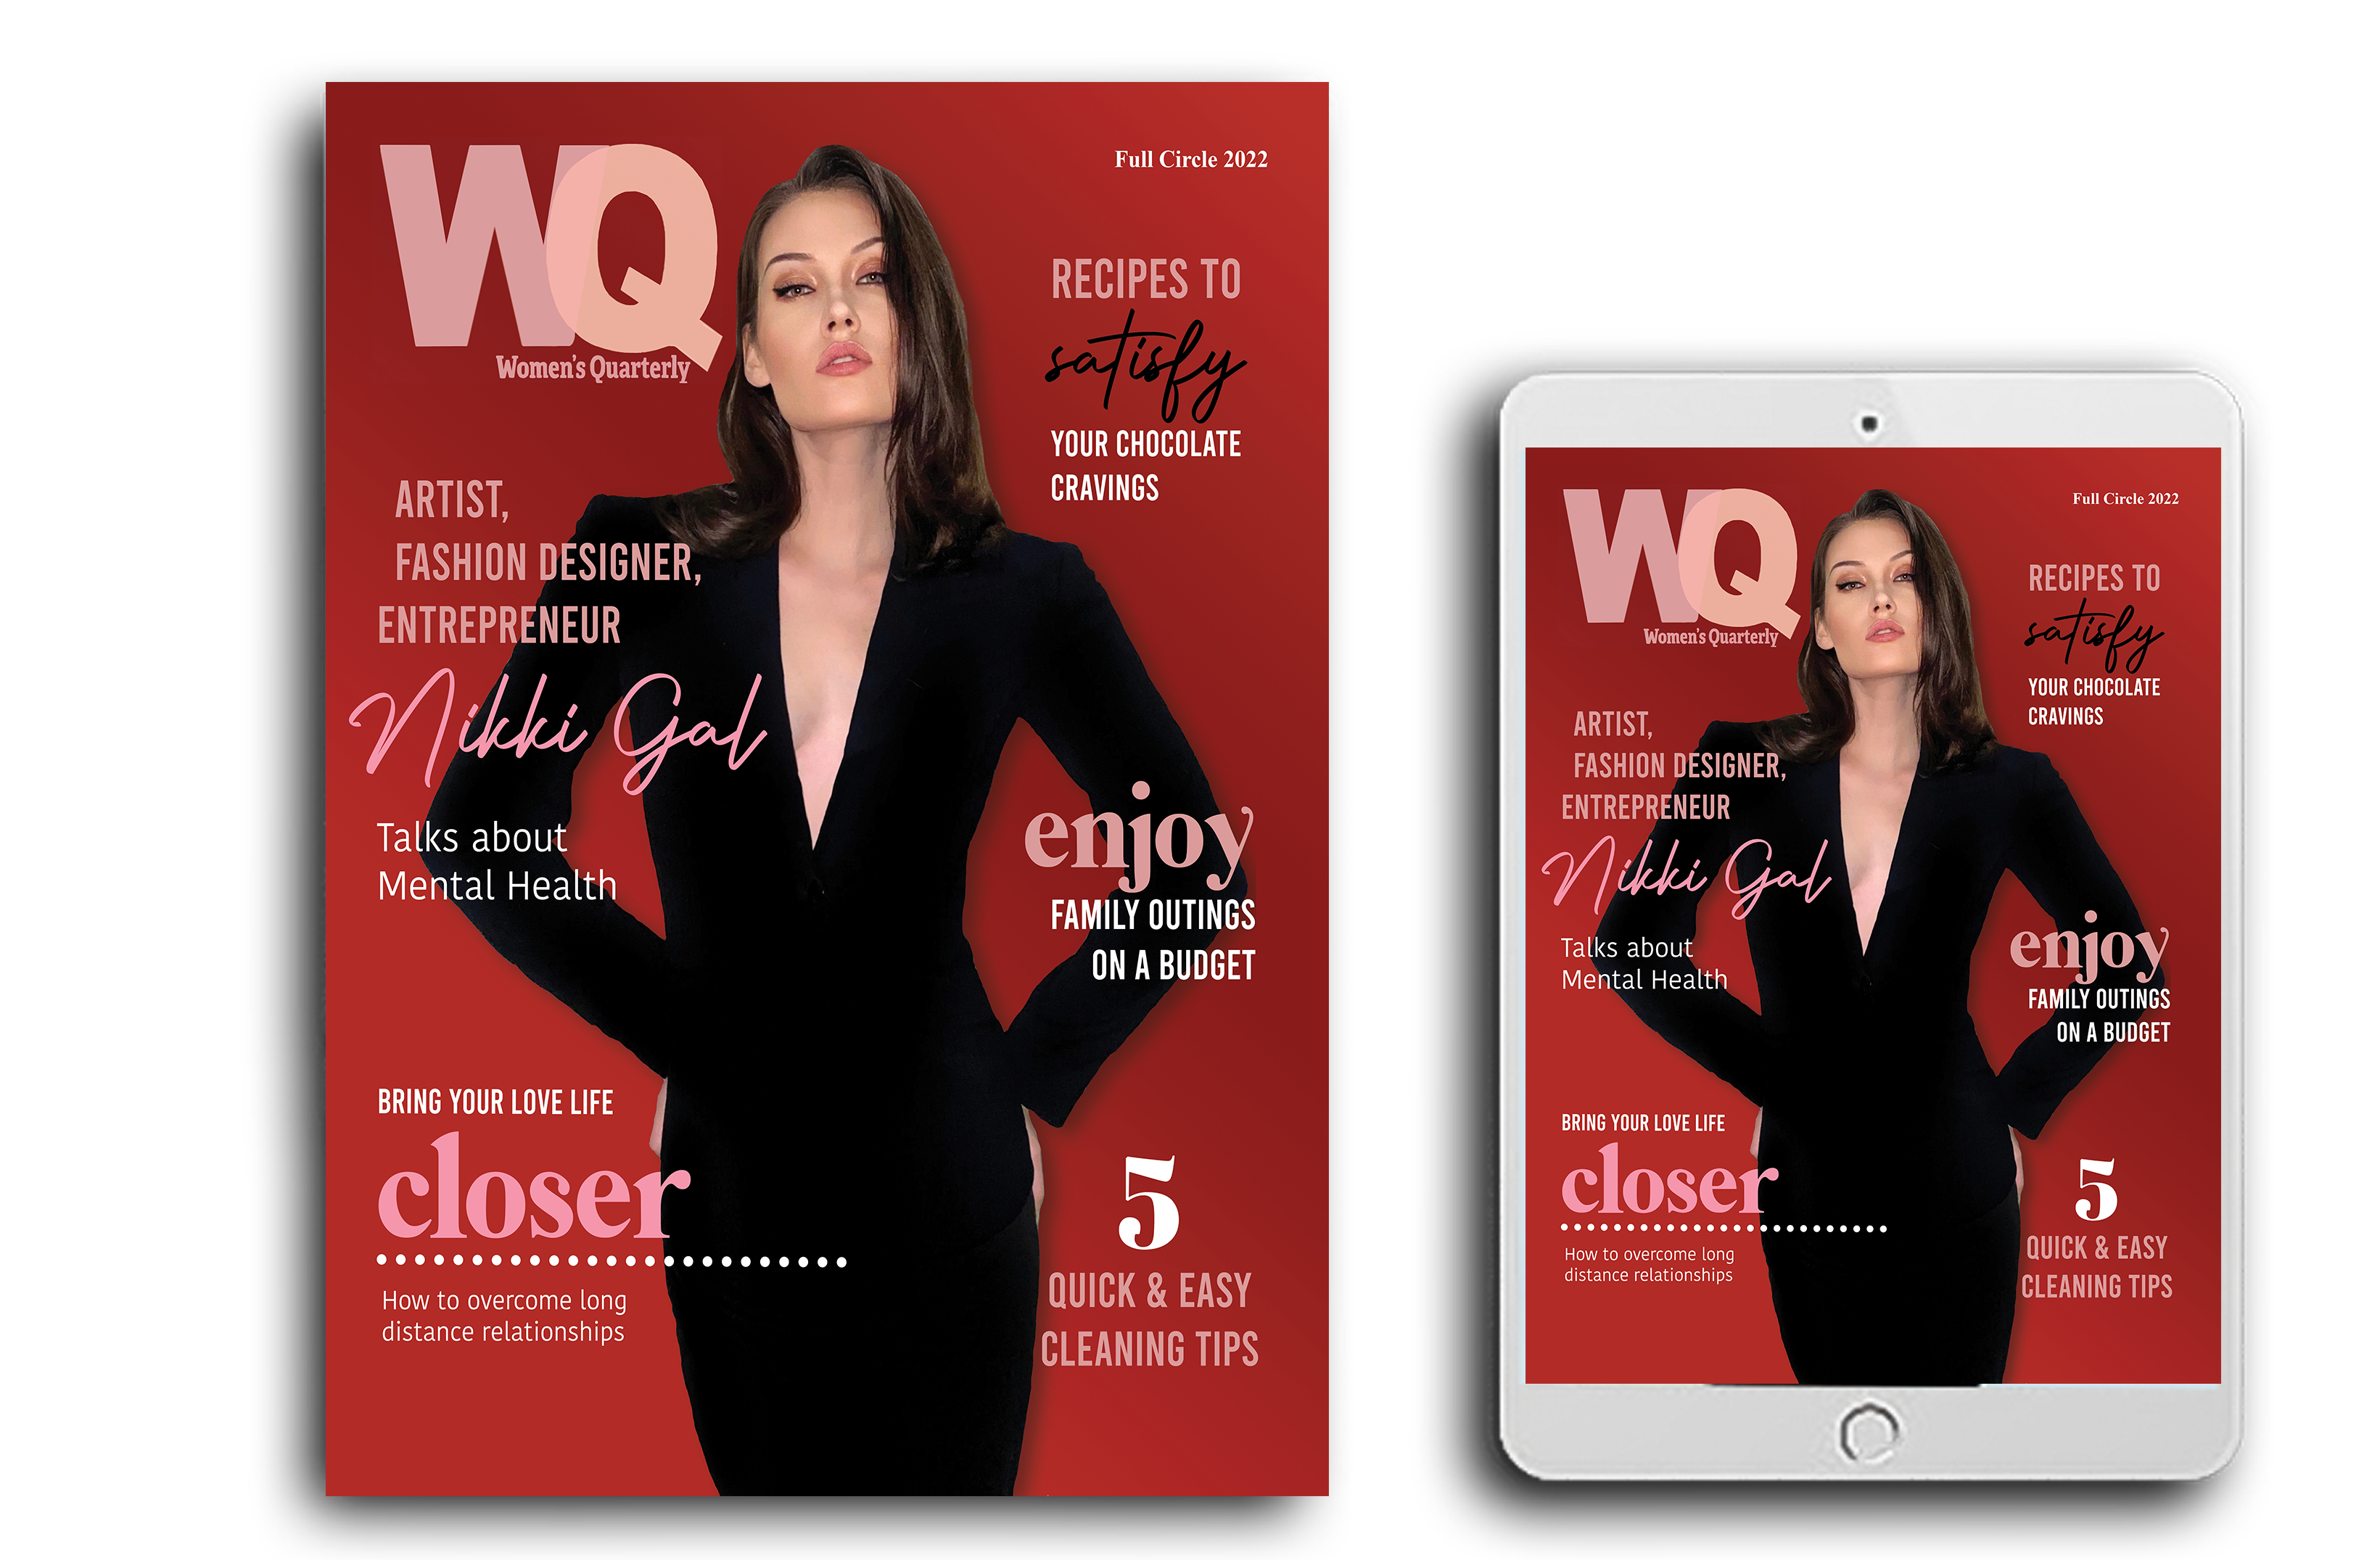 Women's Quarterly Magazine - Full Circle 2022 Edition